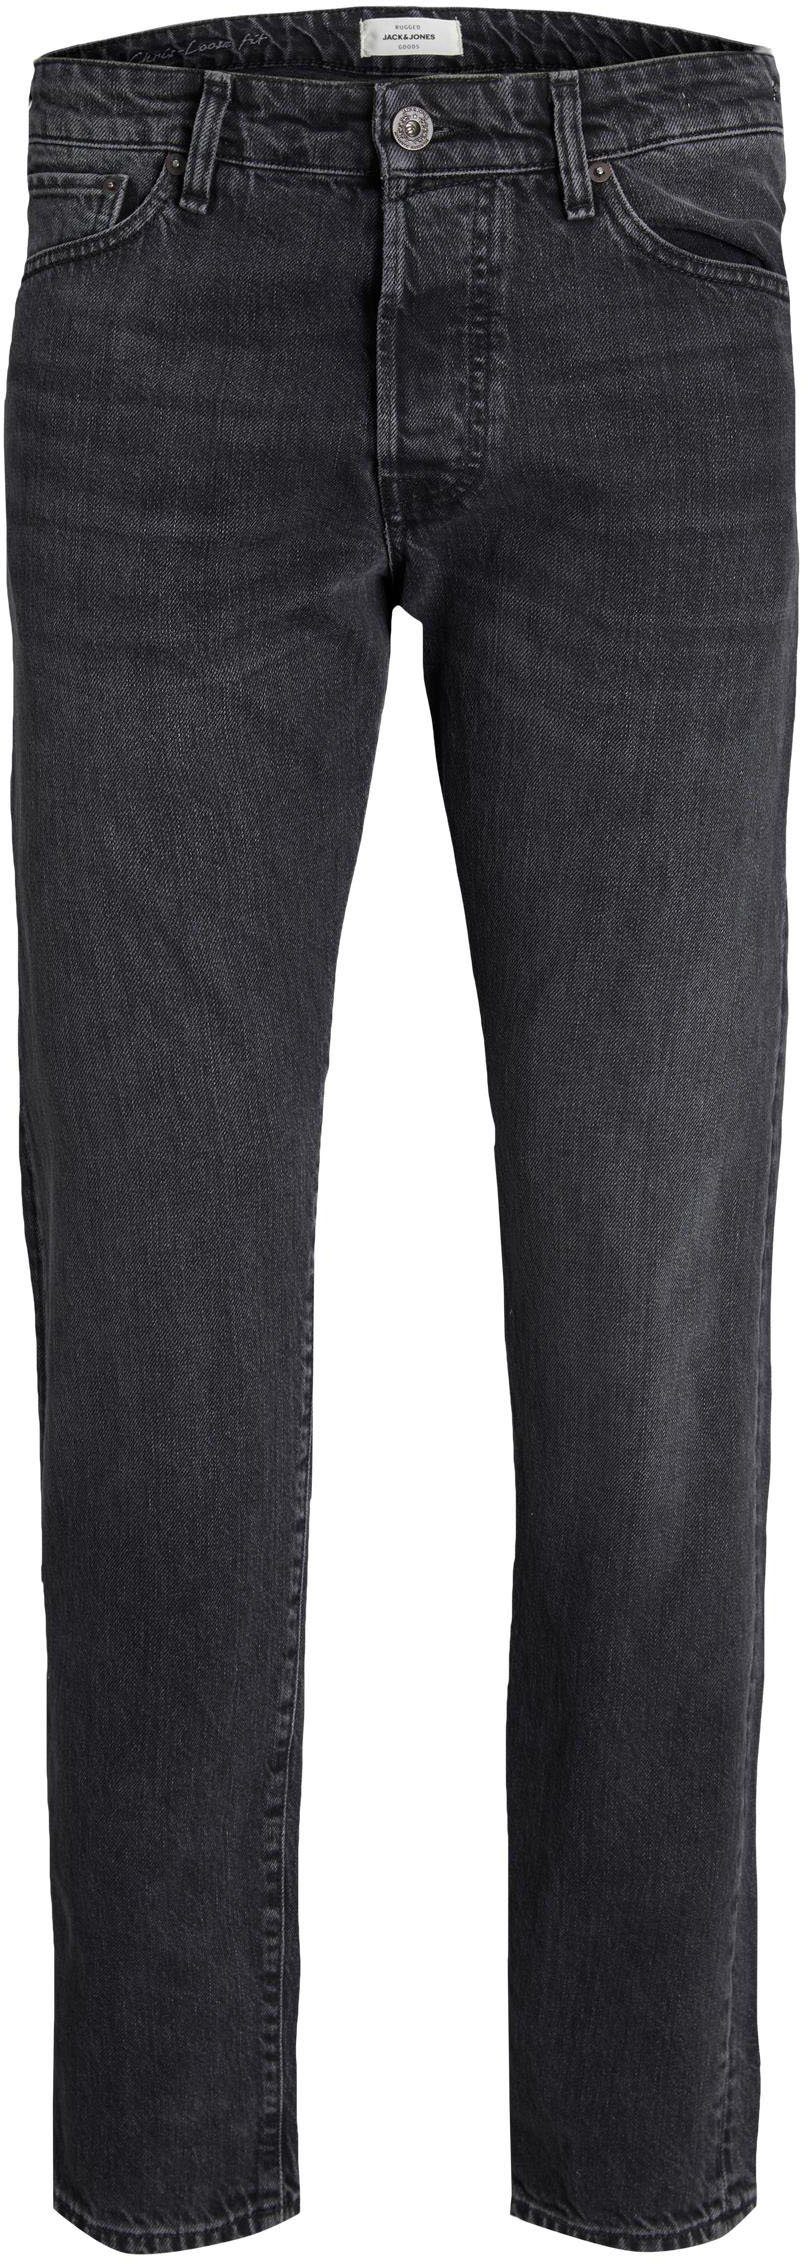 CHRIS Loose-fit-Jeans black Jones denim & Jack COOPER